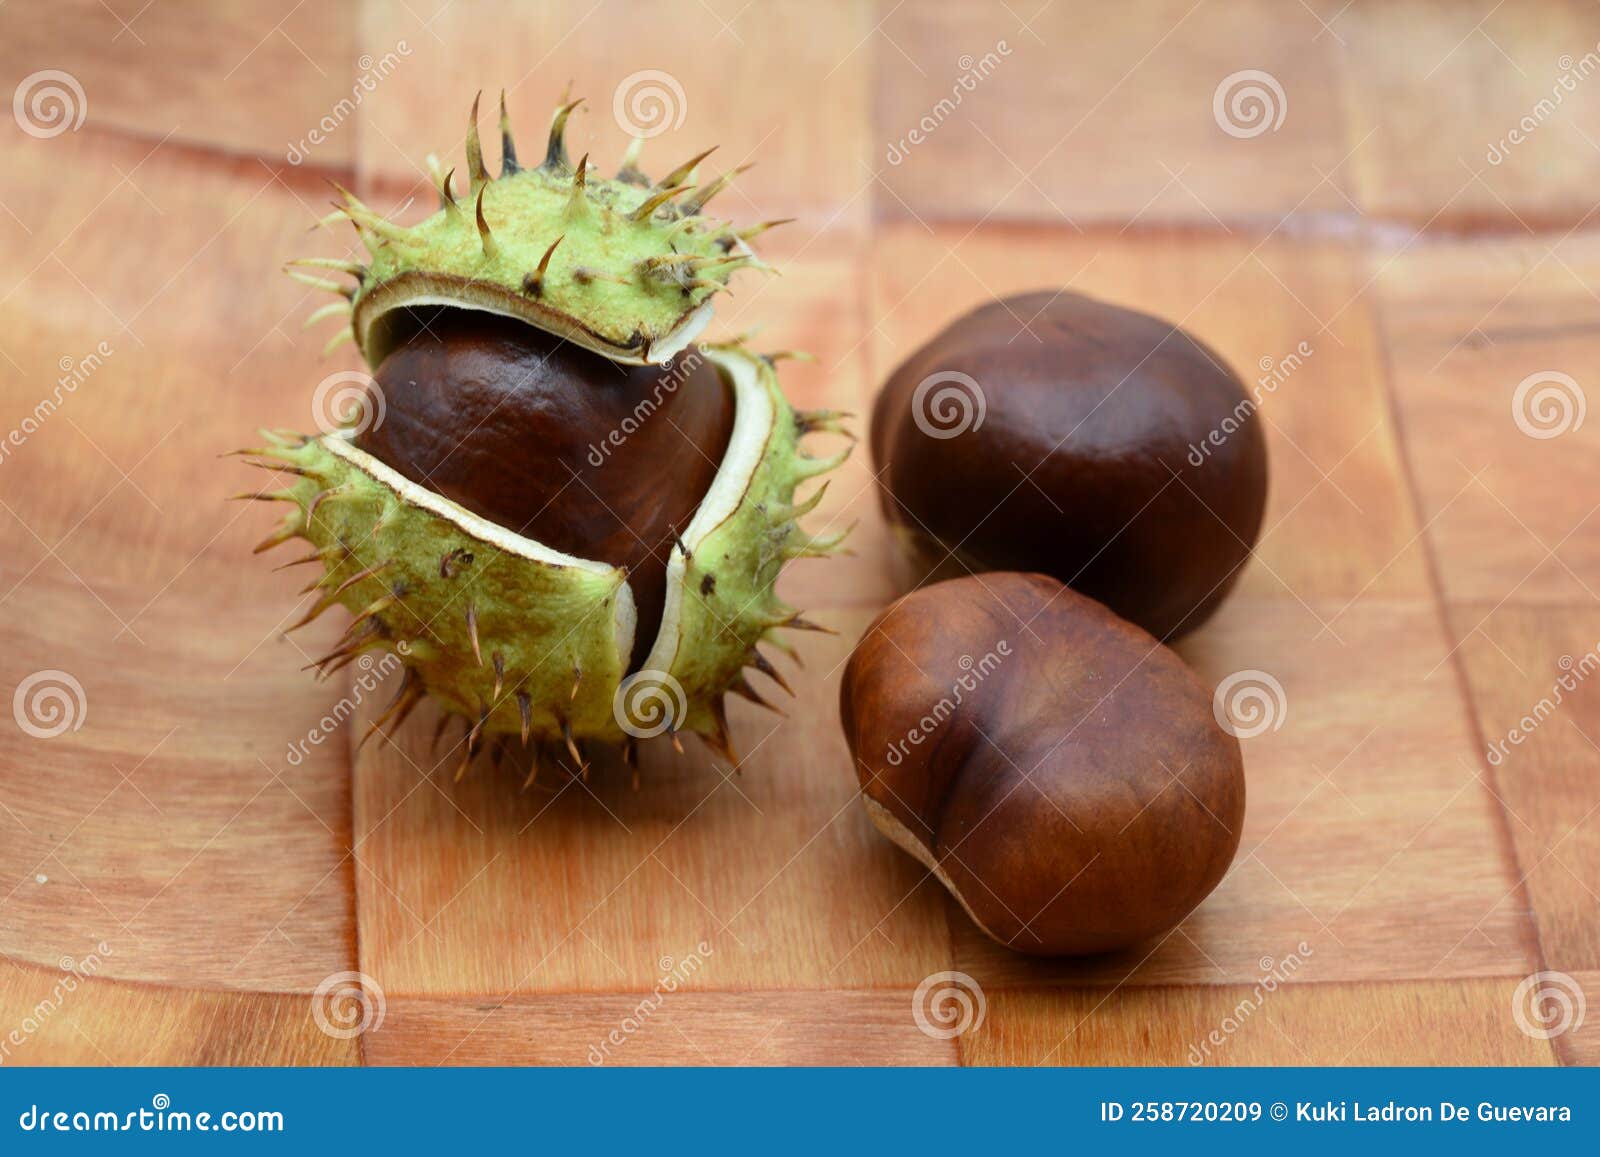 fruits of the horse chestnut tree, aesculus hippocastanum